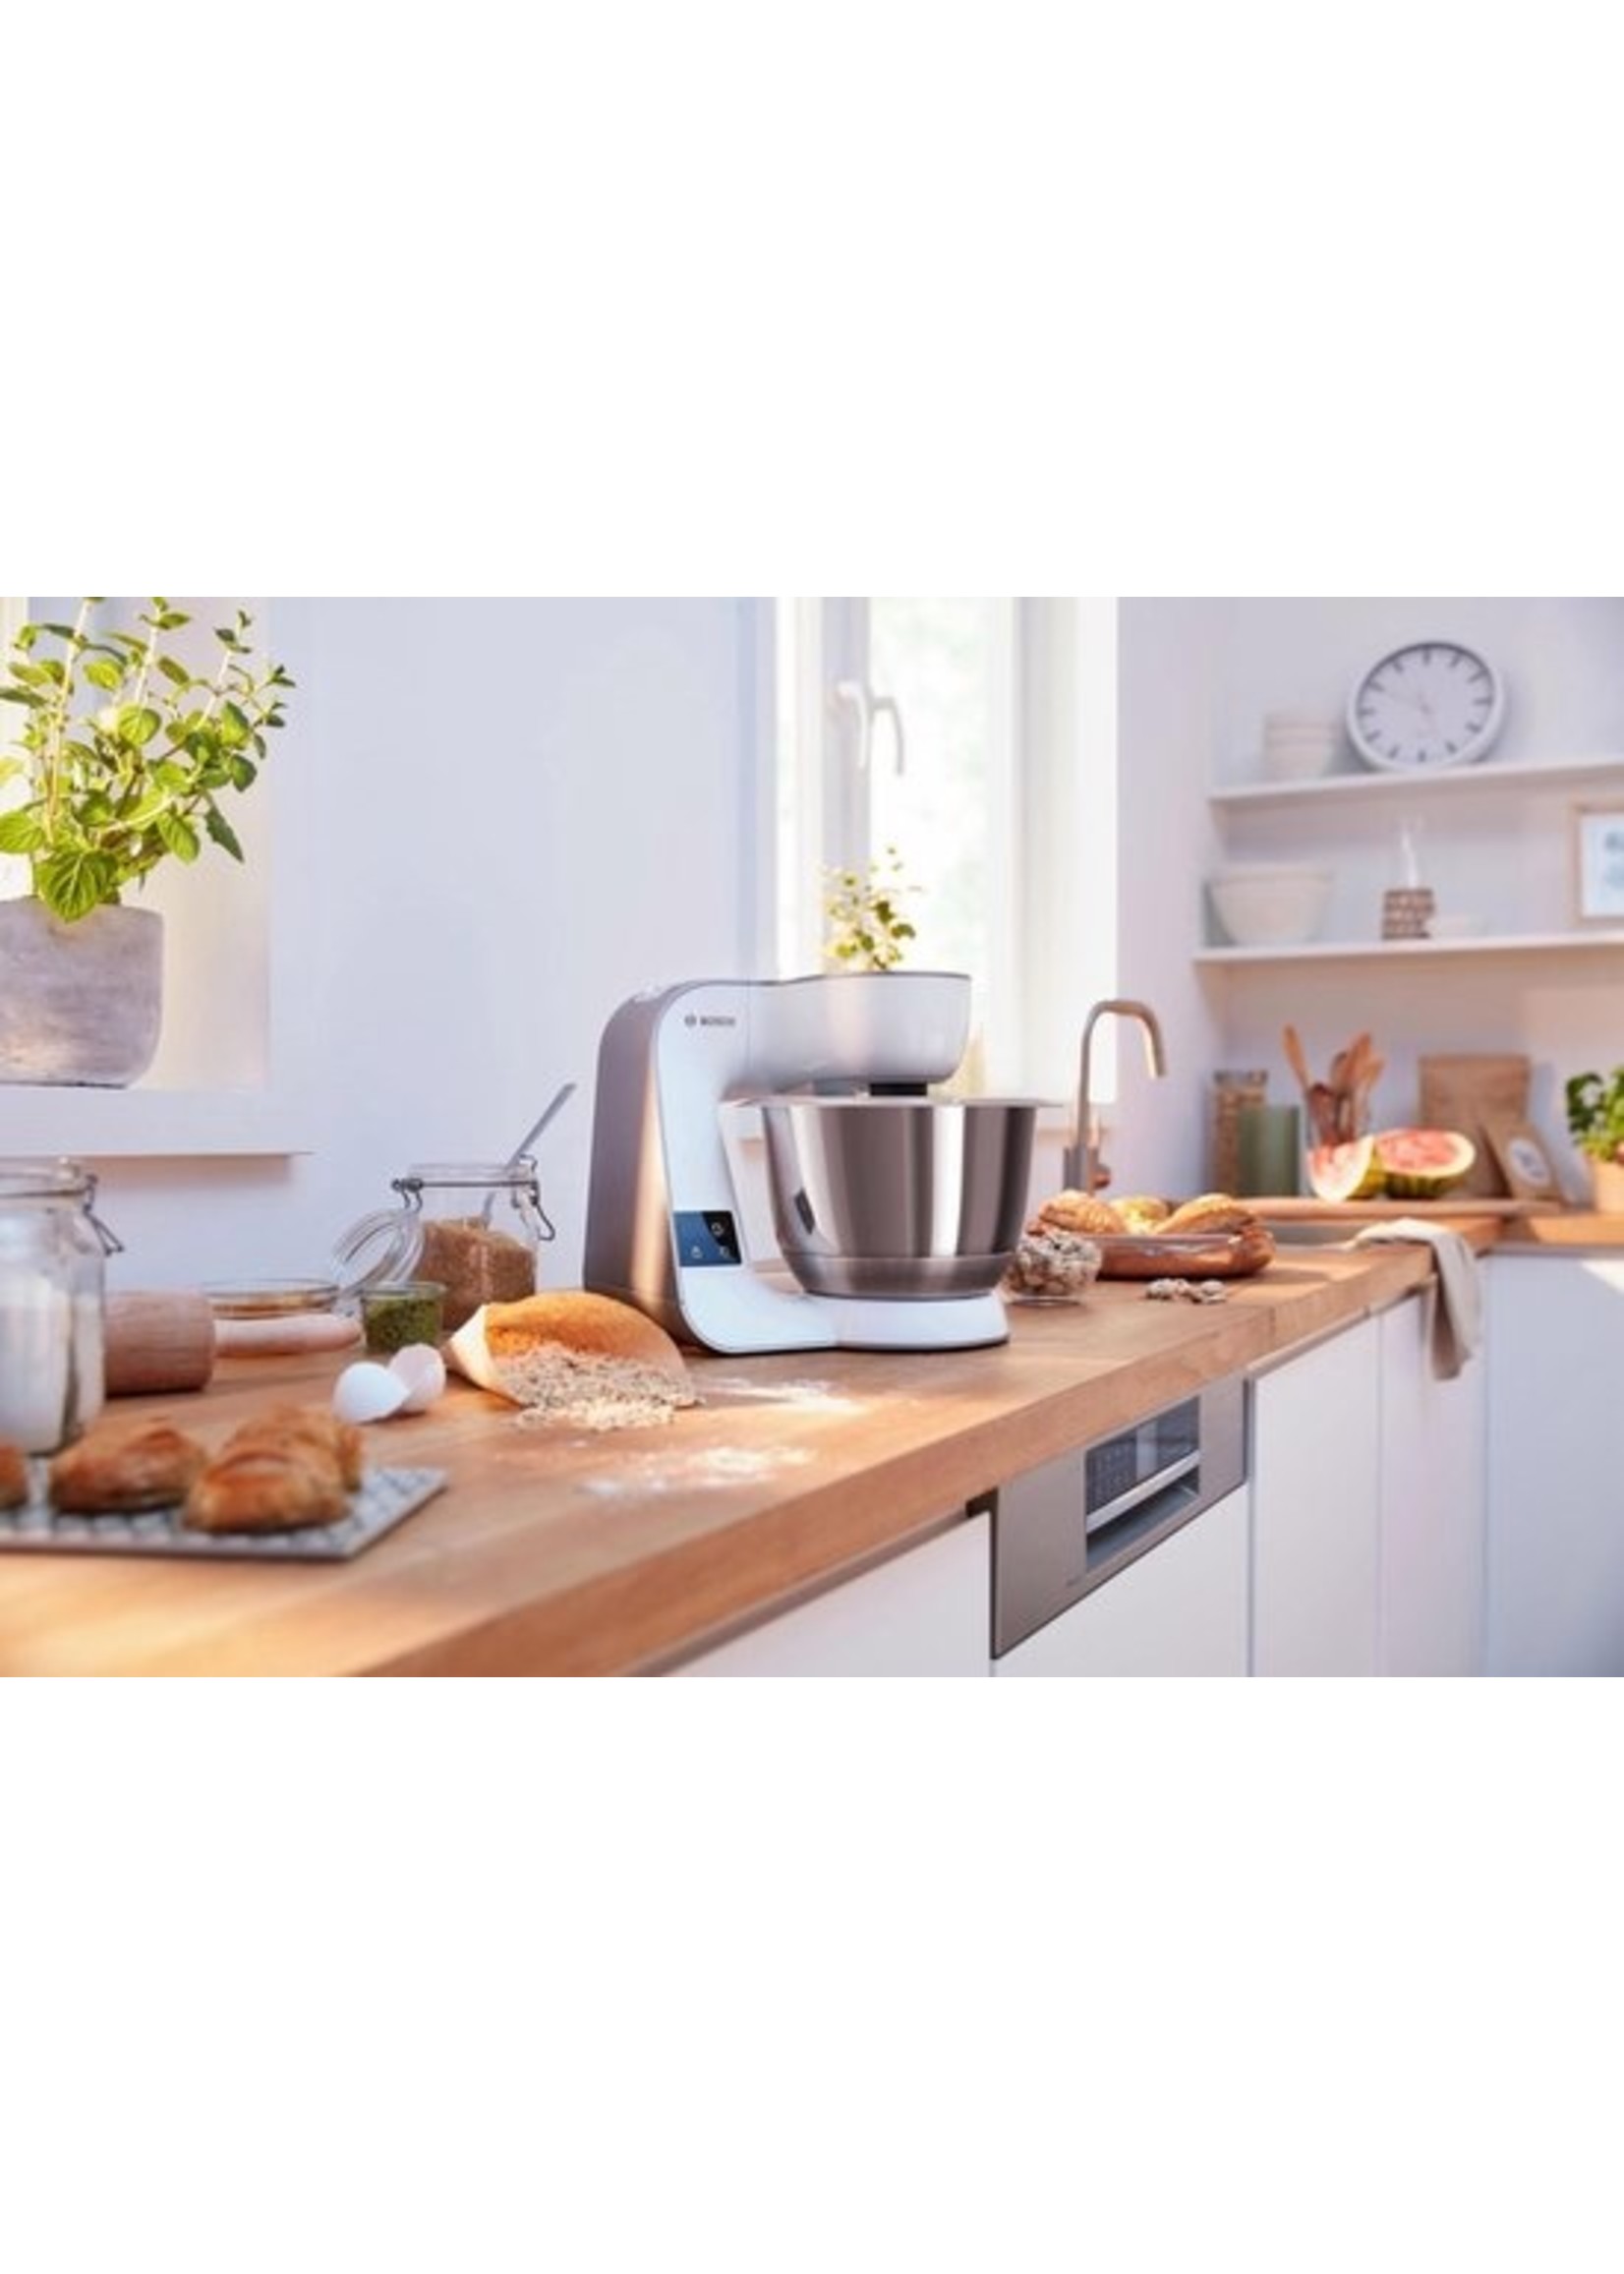 Bosch Bosch MUM5XW20 CreationLine Premium - Keukenmachine - Incl weegschaal en timer koopjeshoek